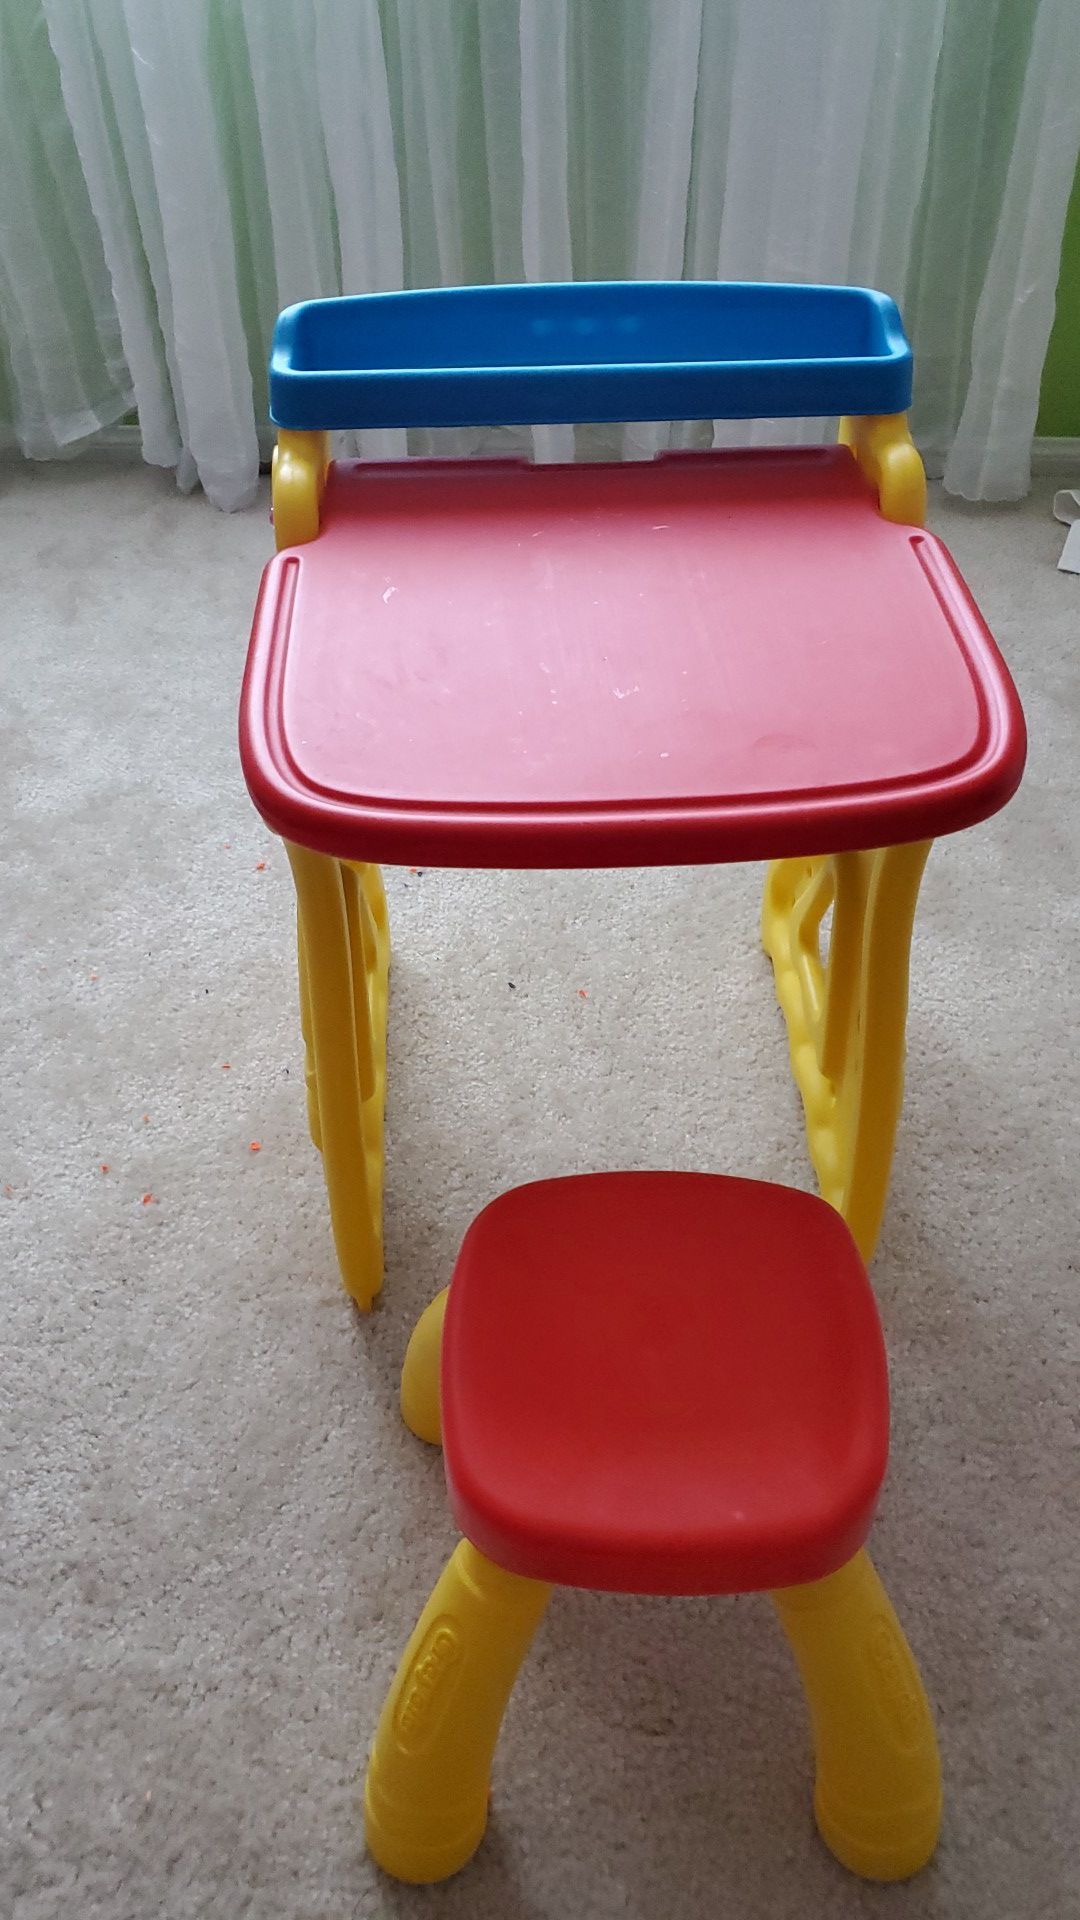 Crayola activity desk and stool